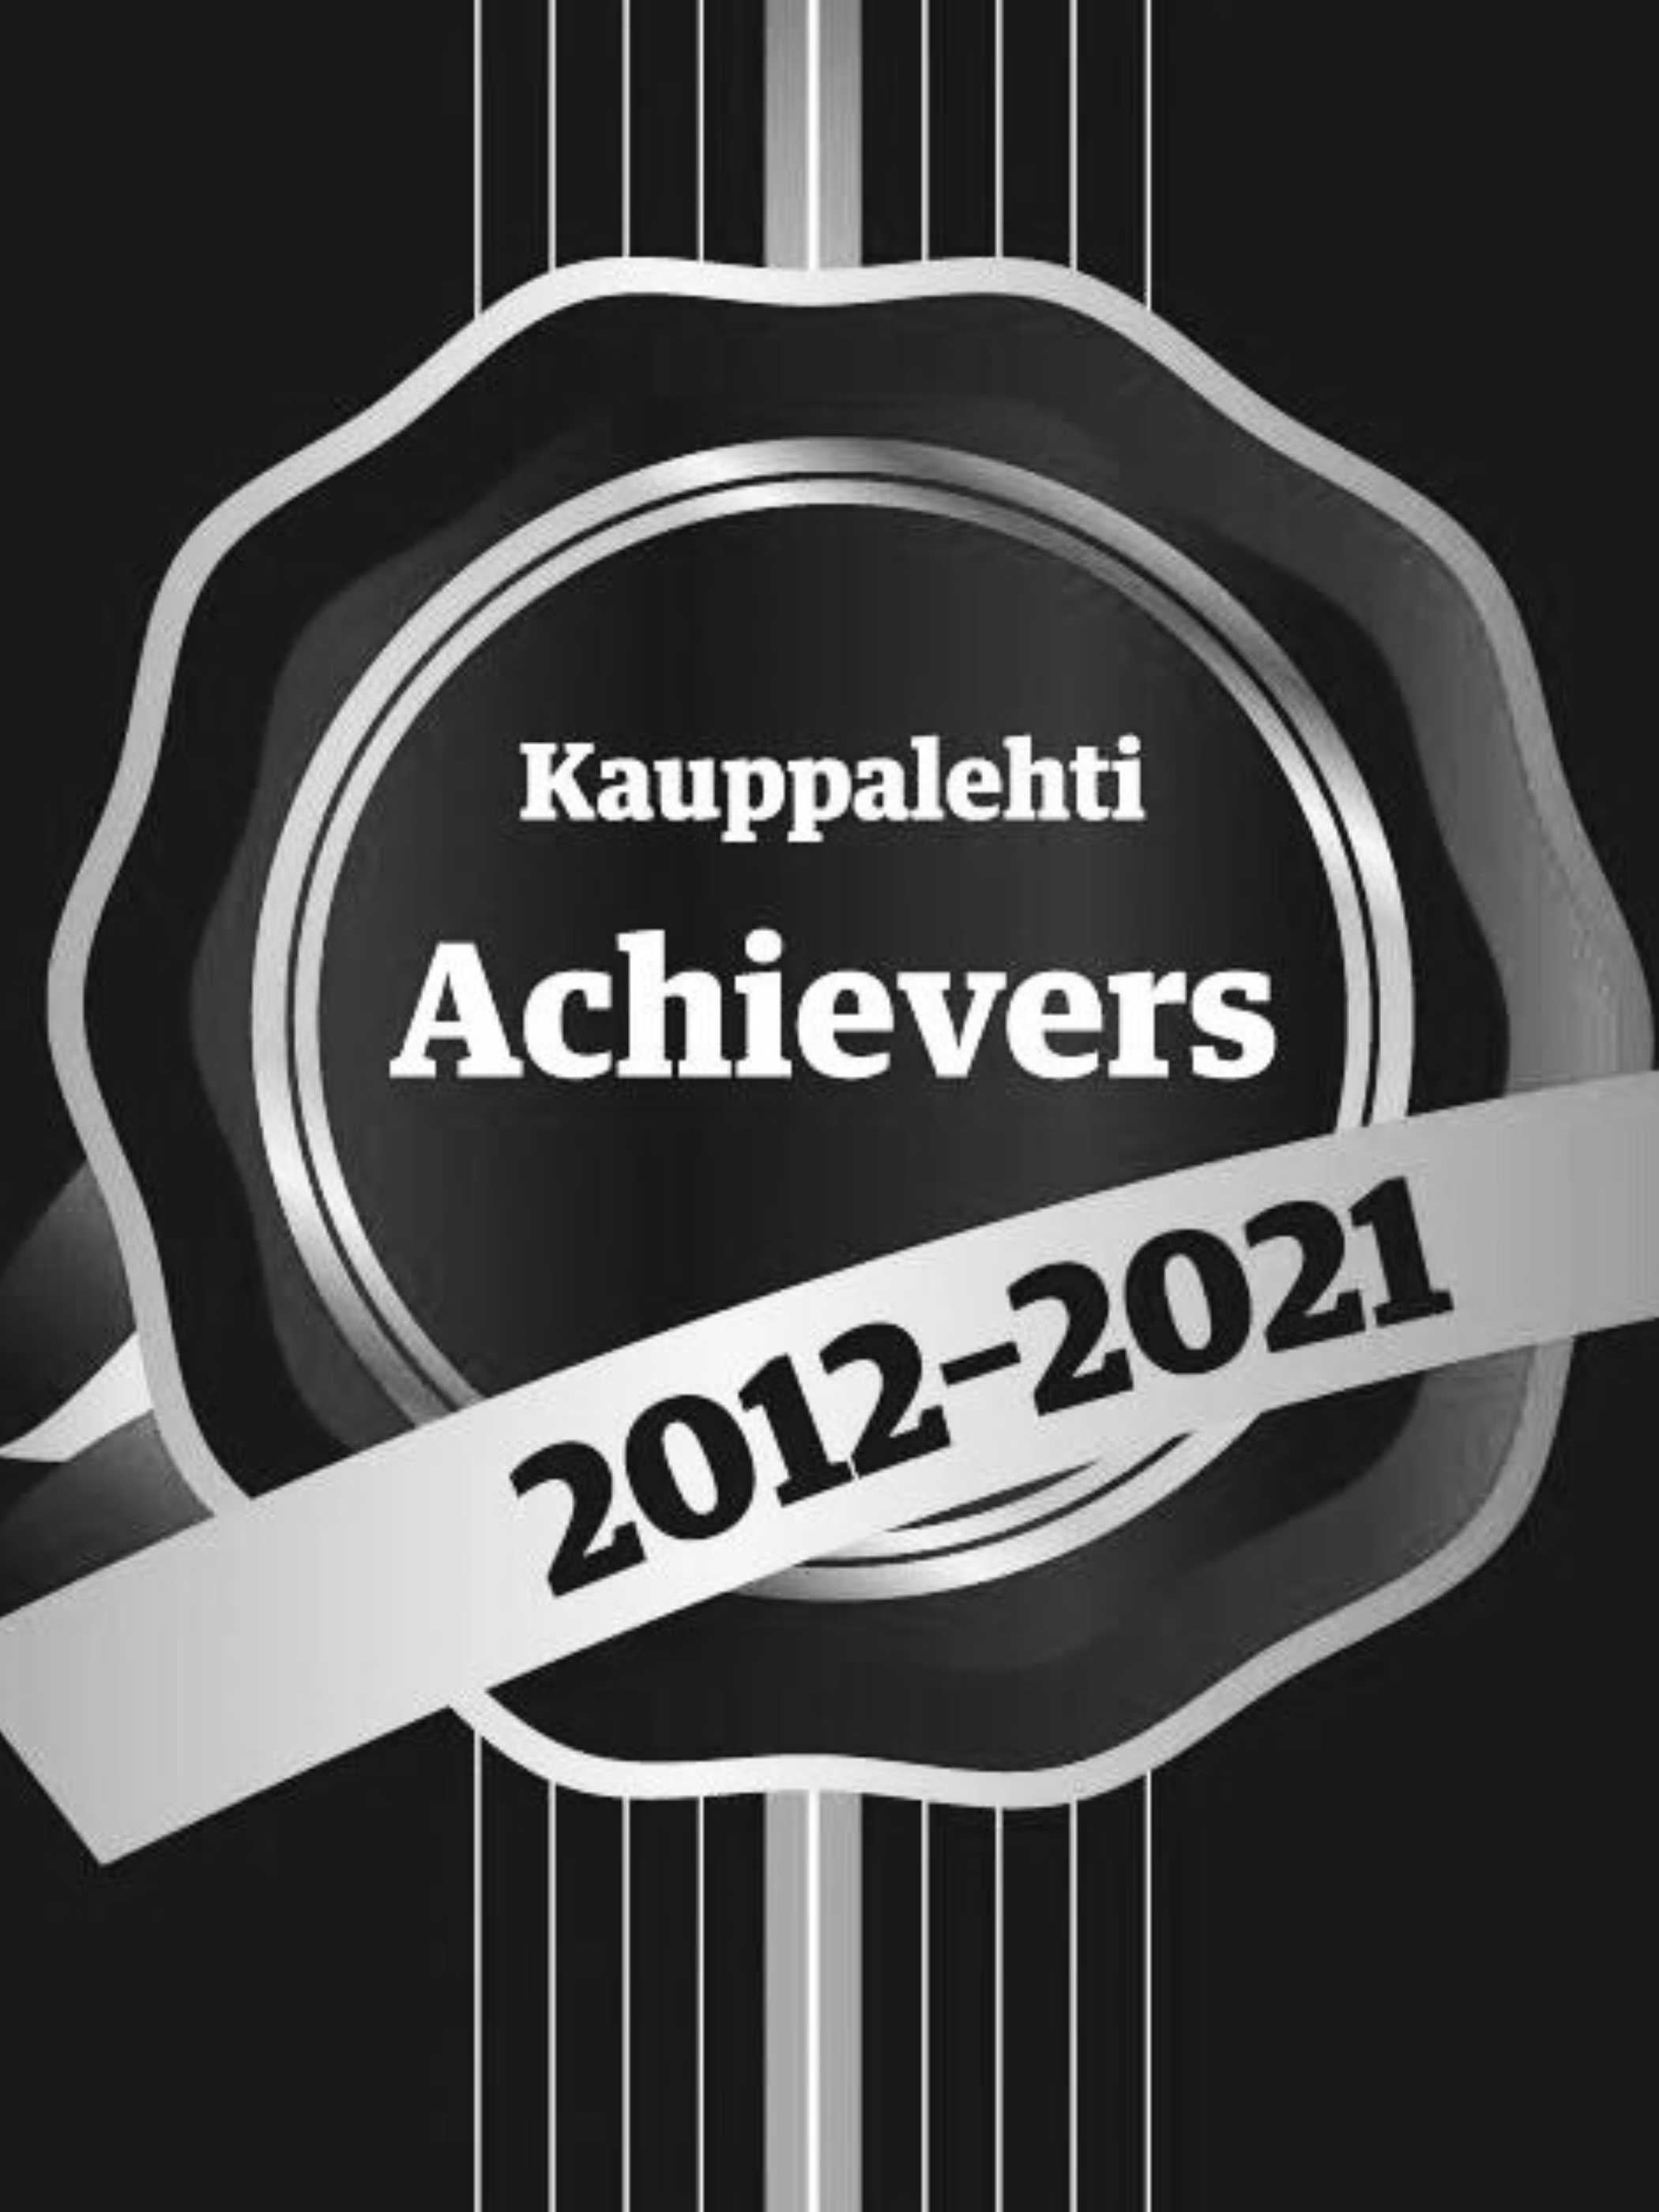 Andiata Kauppalehti’s Achiever for 10 consecutive years